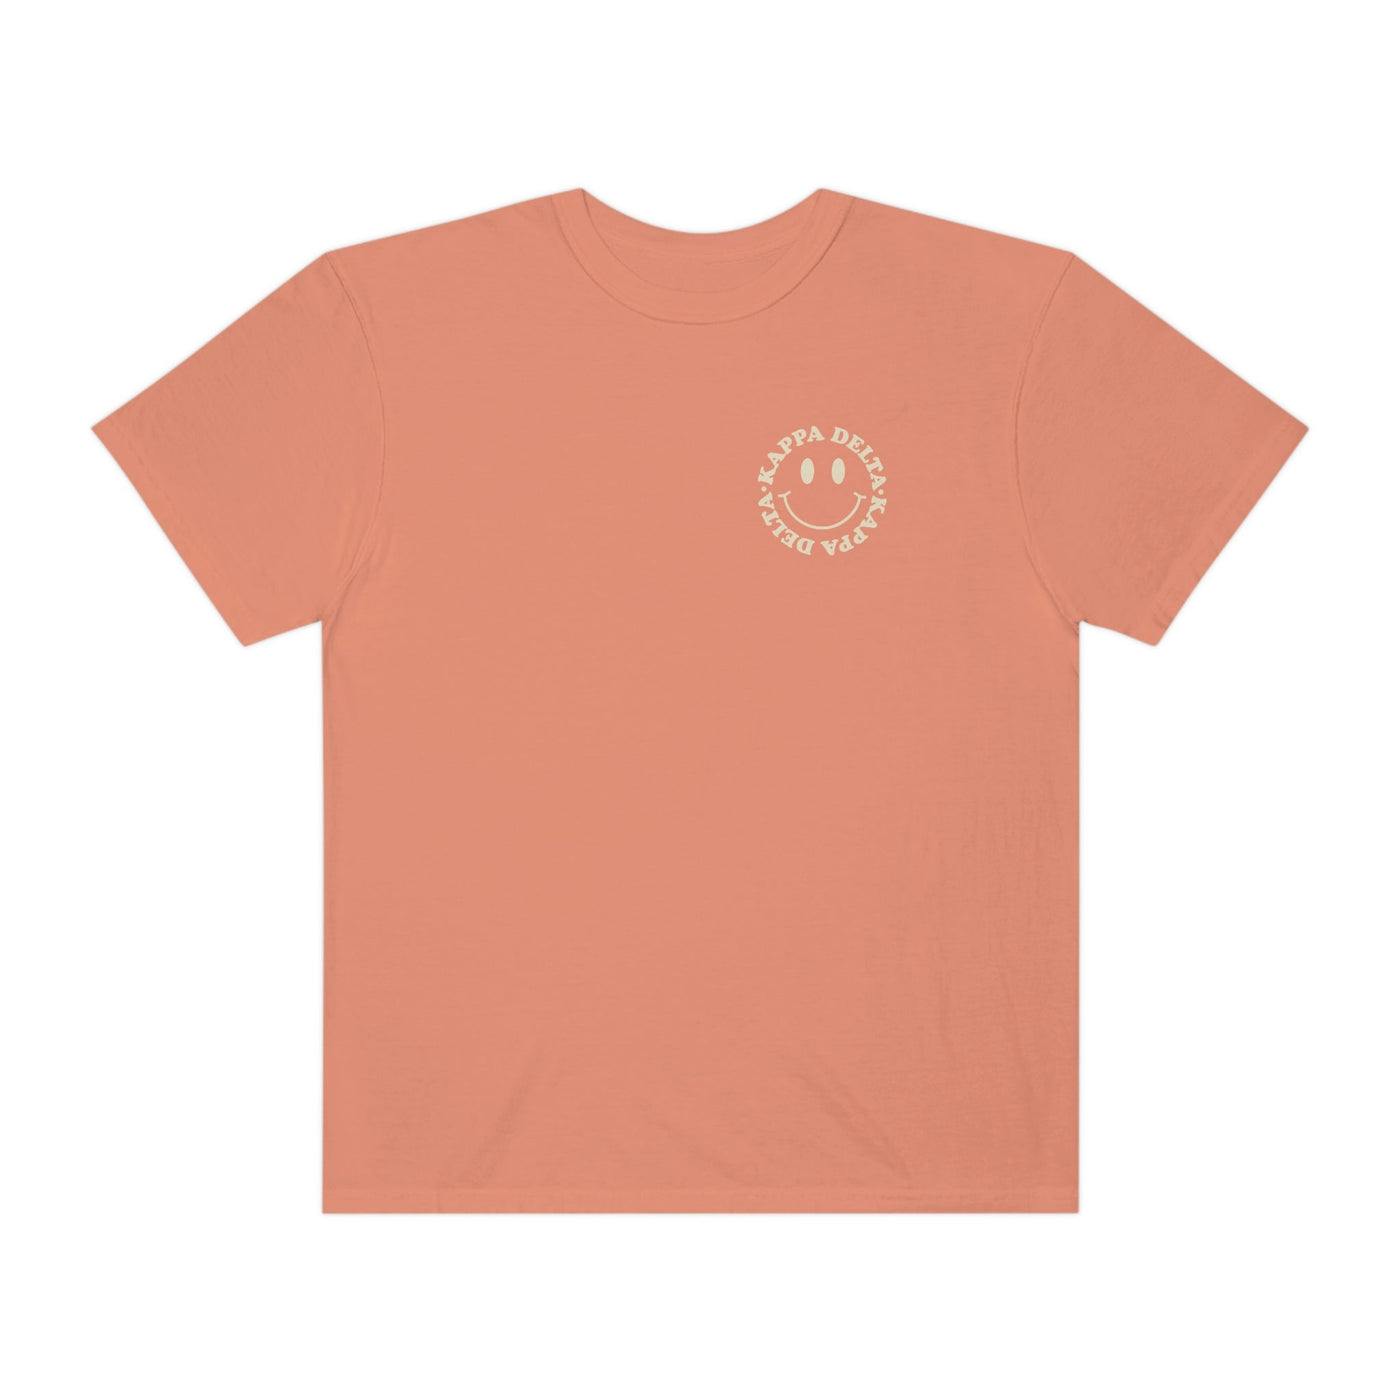 Kappa Delta Smile Sorority Comfy T-Shirt